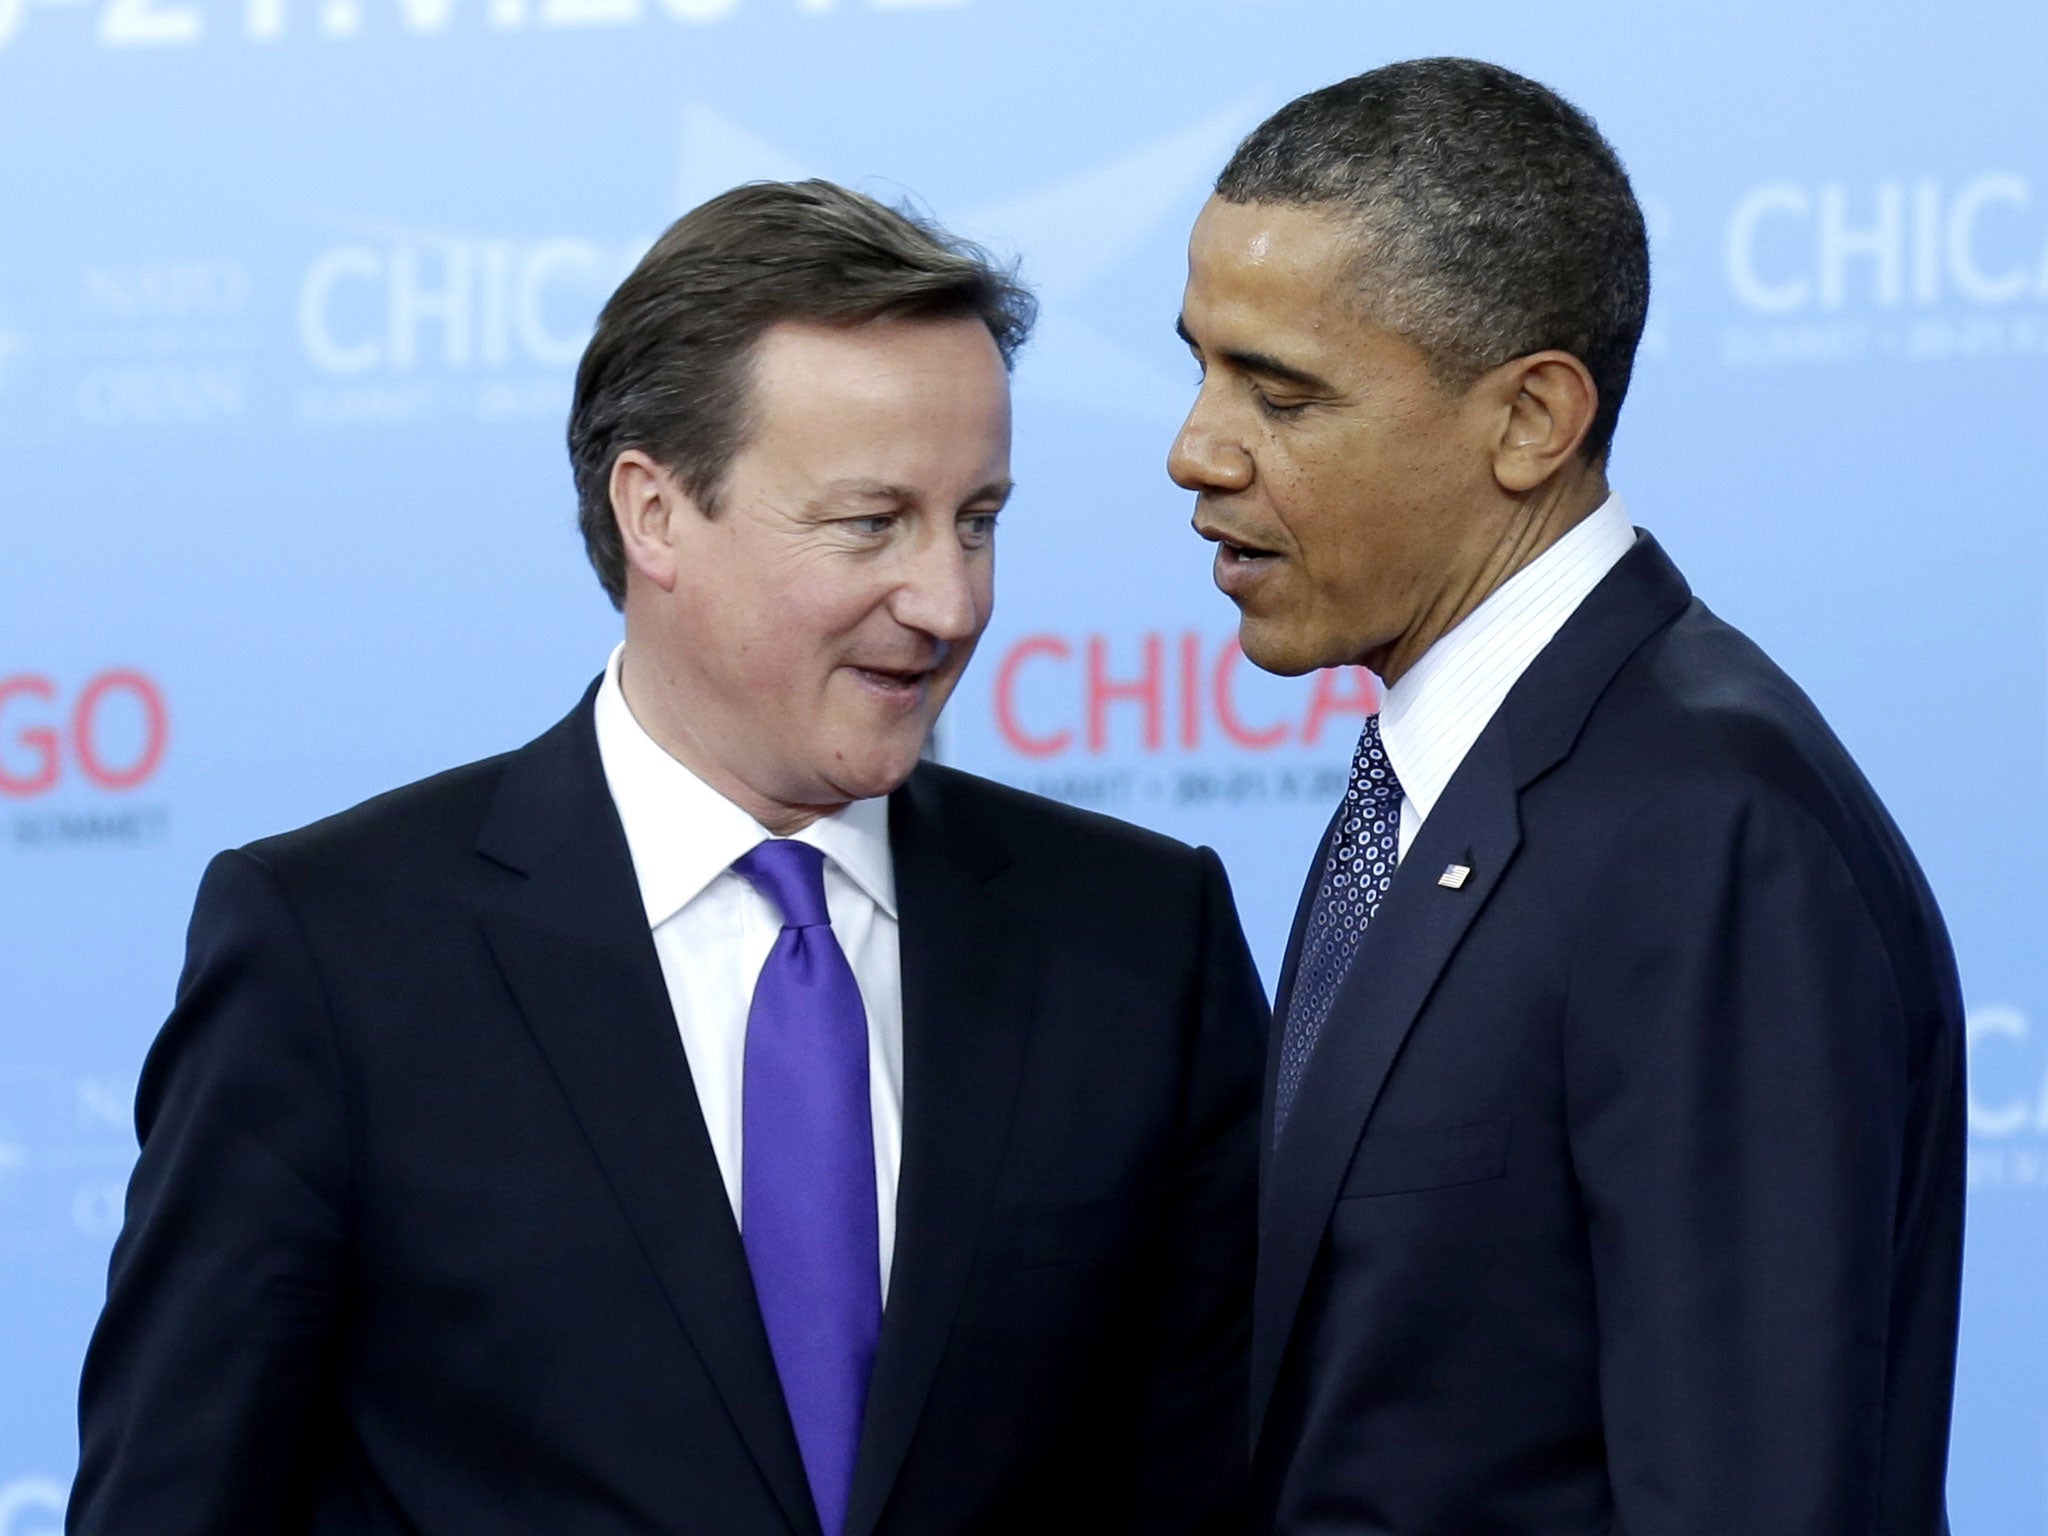 David Cameron and President Obama will discuss a US-EU trade deal